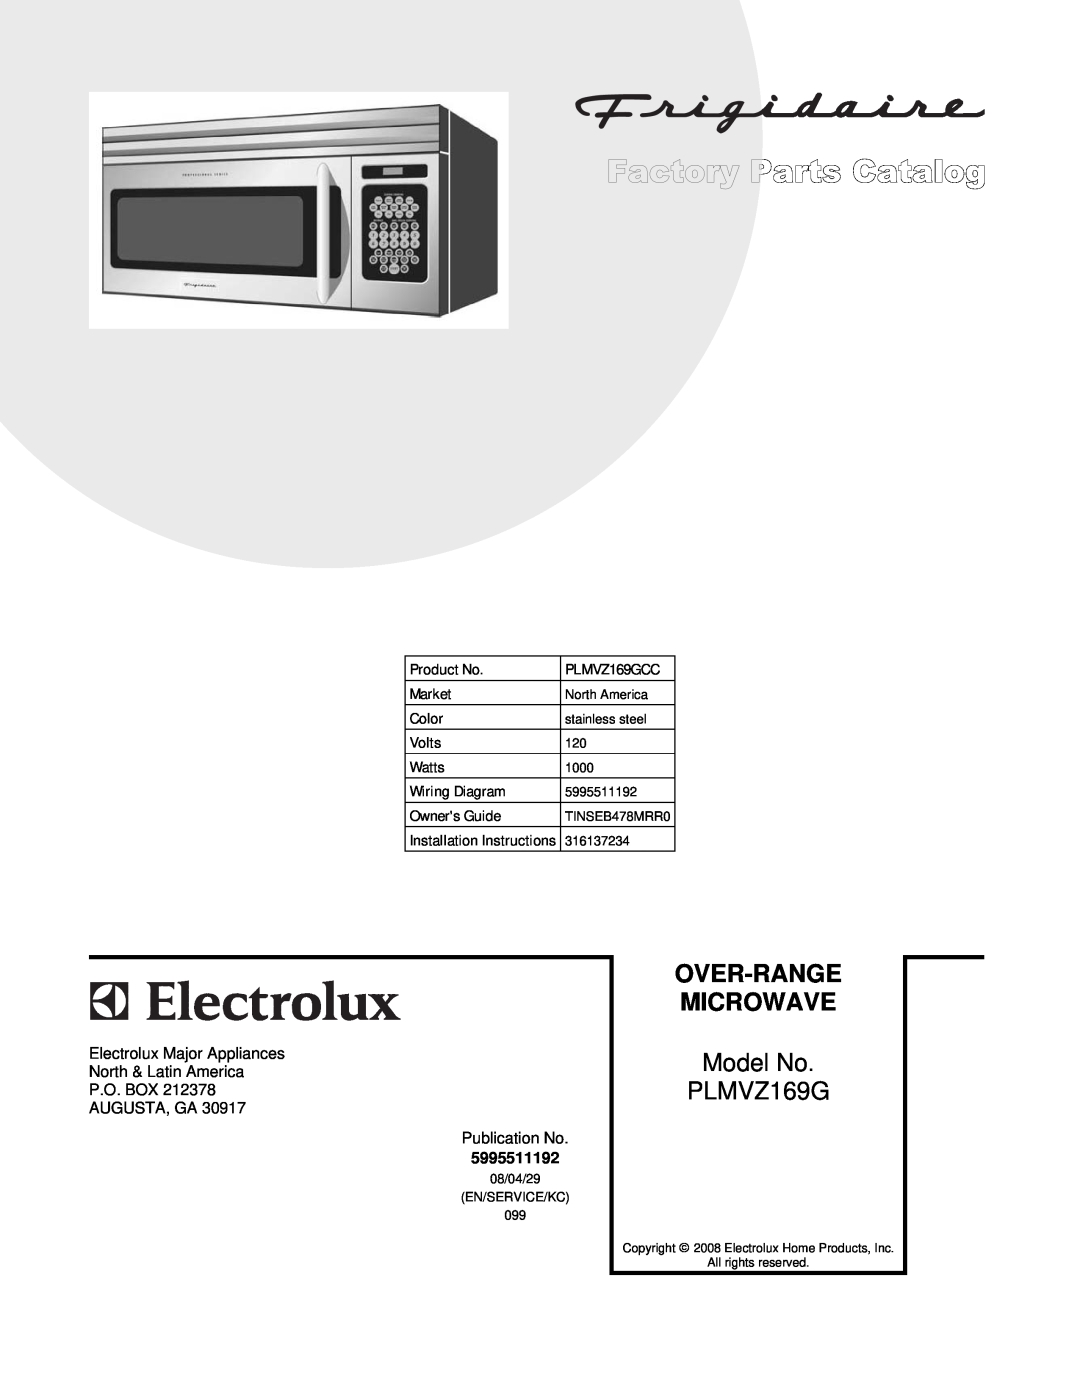 Electrolux installation instructions Over-Range Microwave, Model No PLMVZ169G 